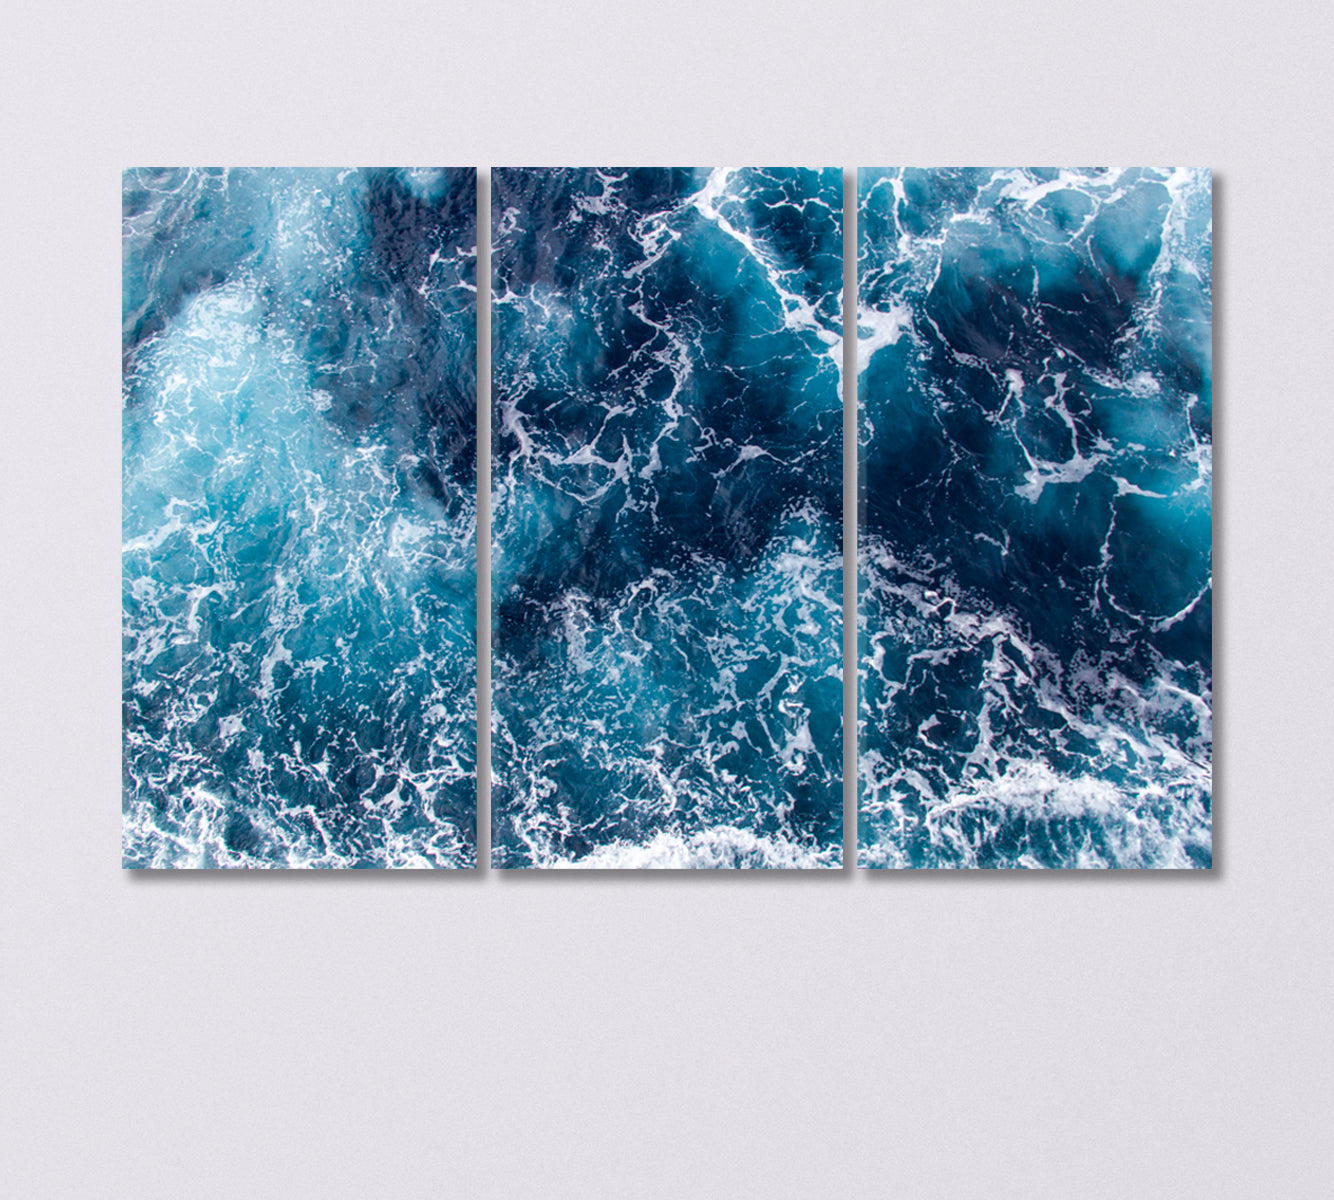 Blue Sea Waves with Foam Canvas Print-Canvas Print-CetArt-3 Panels-36x24 inches-CetArt